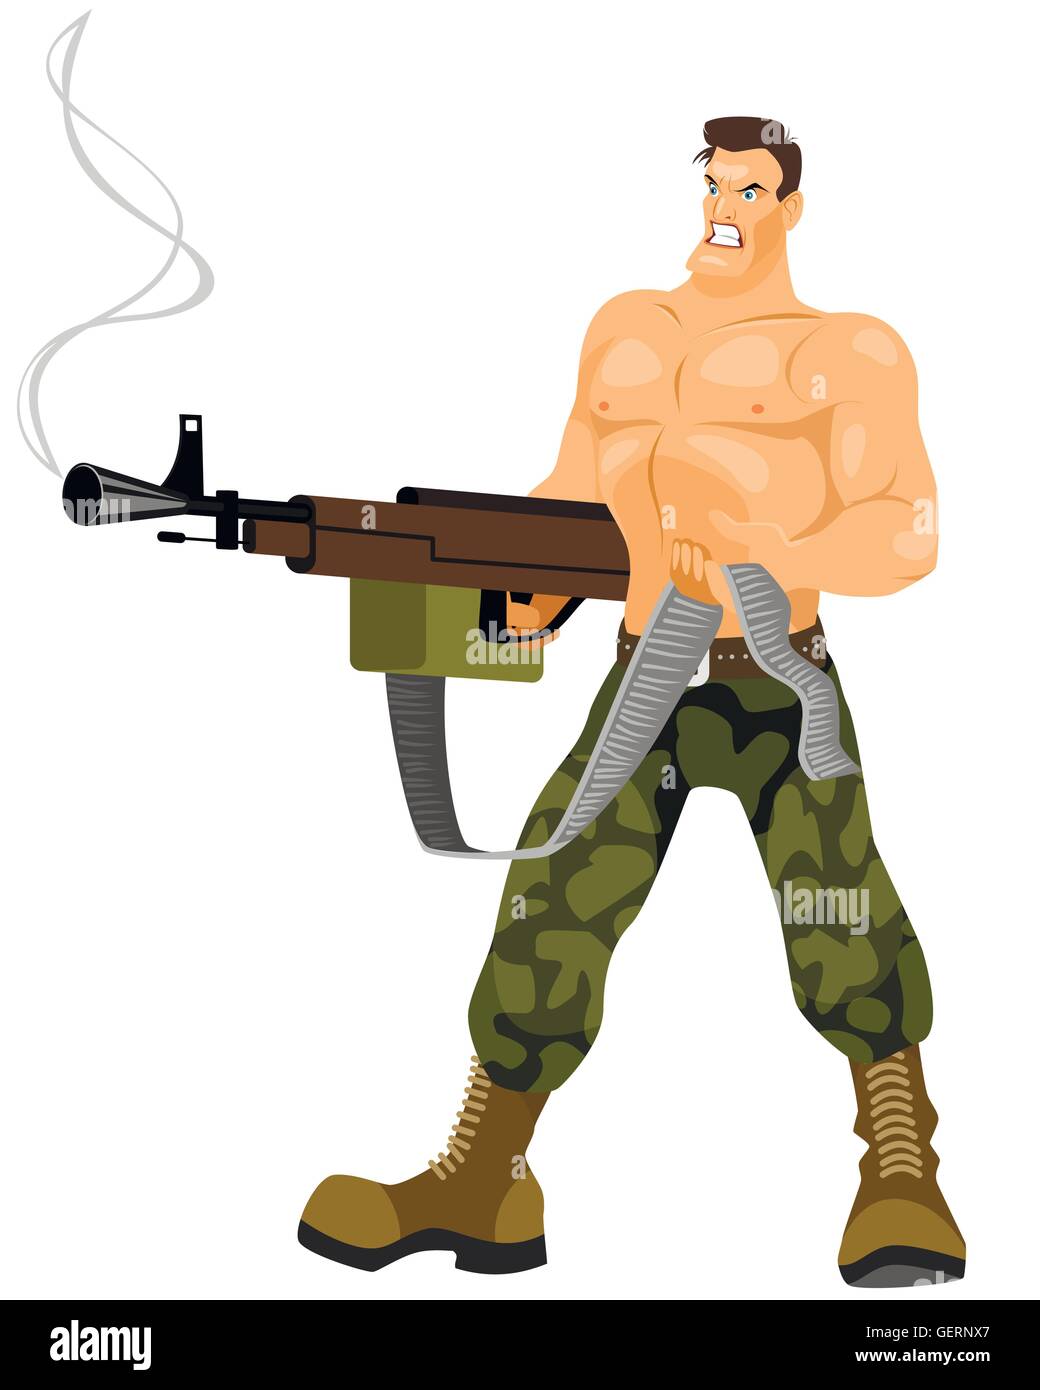 Vector illustration of a commando with machine gun Stock Vector